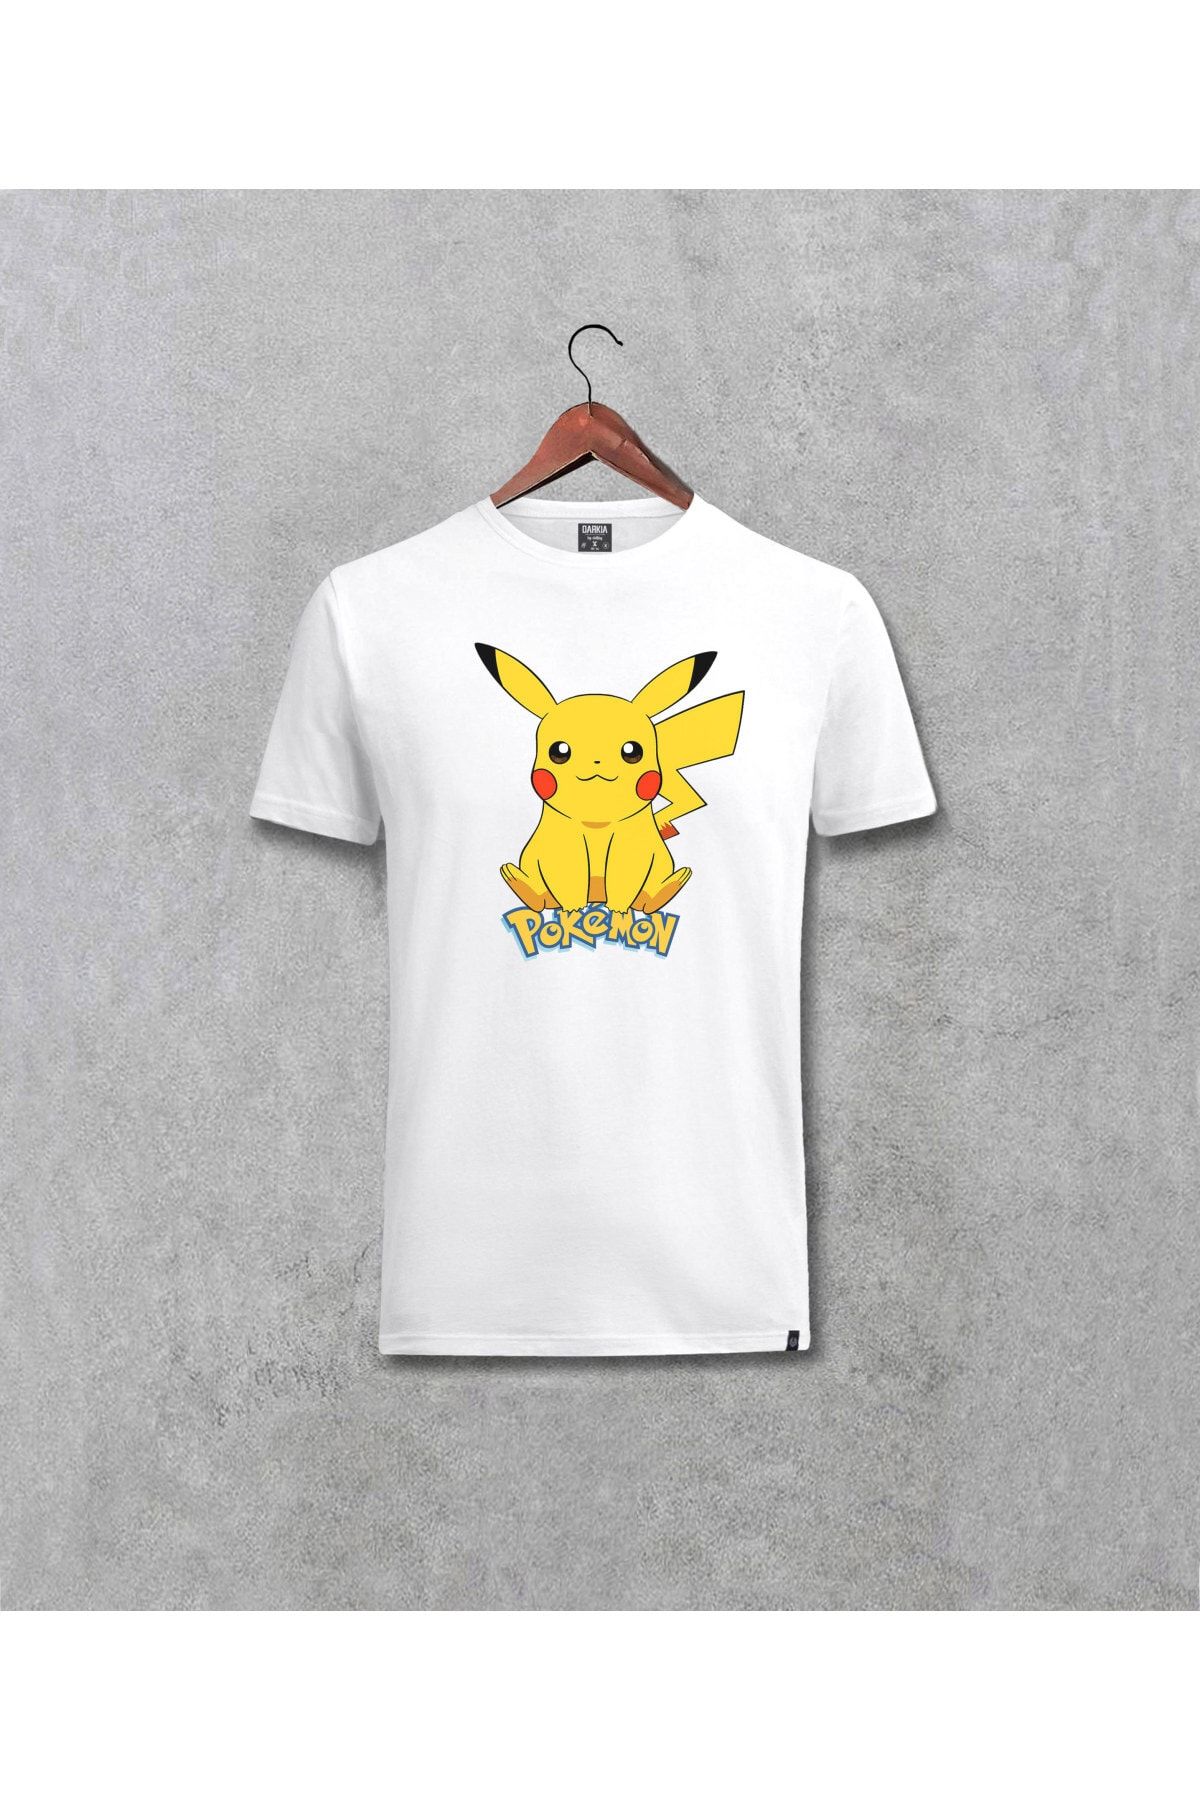 Darkia Pokemon Pikachu Printed Design T-Shirt - Trendyol